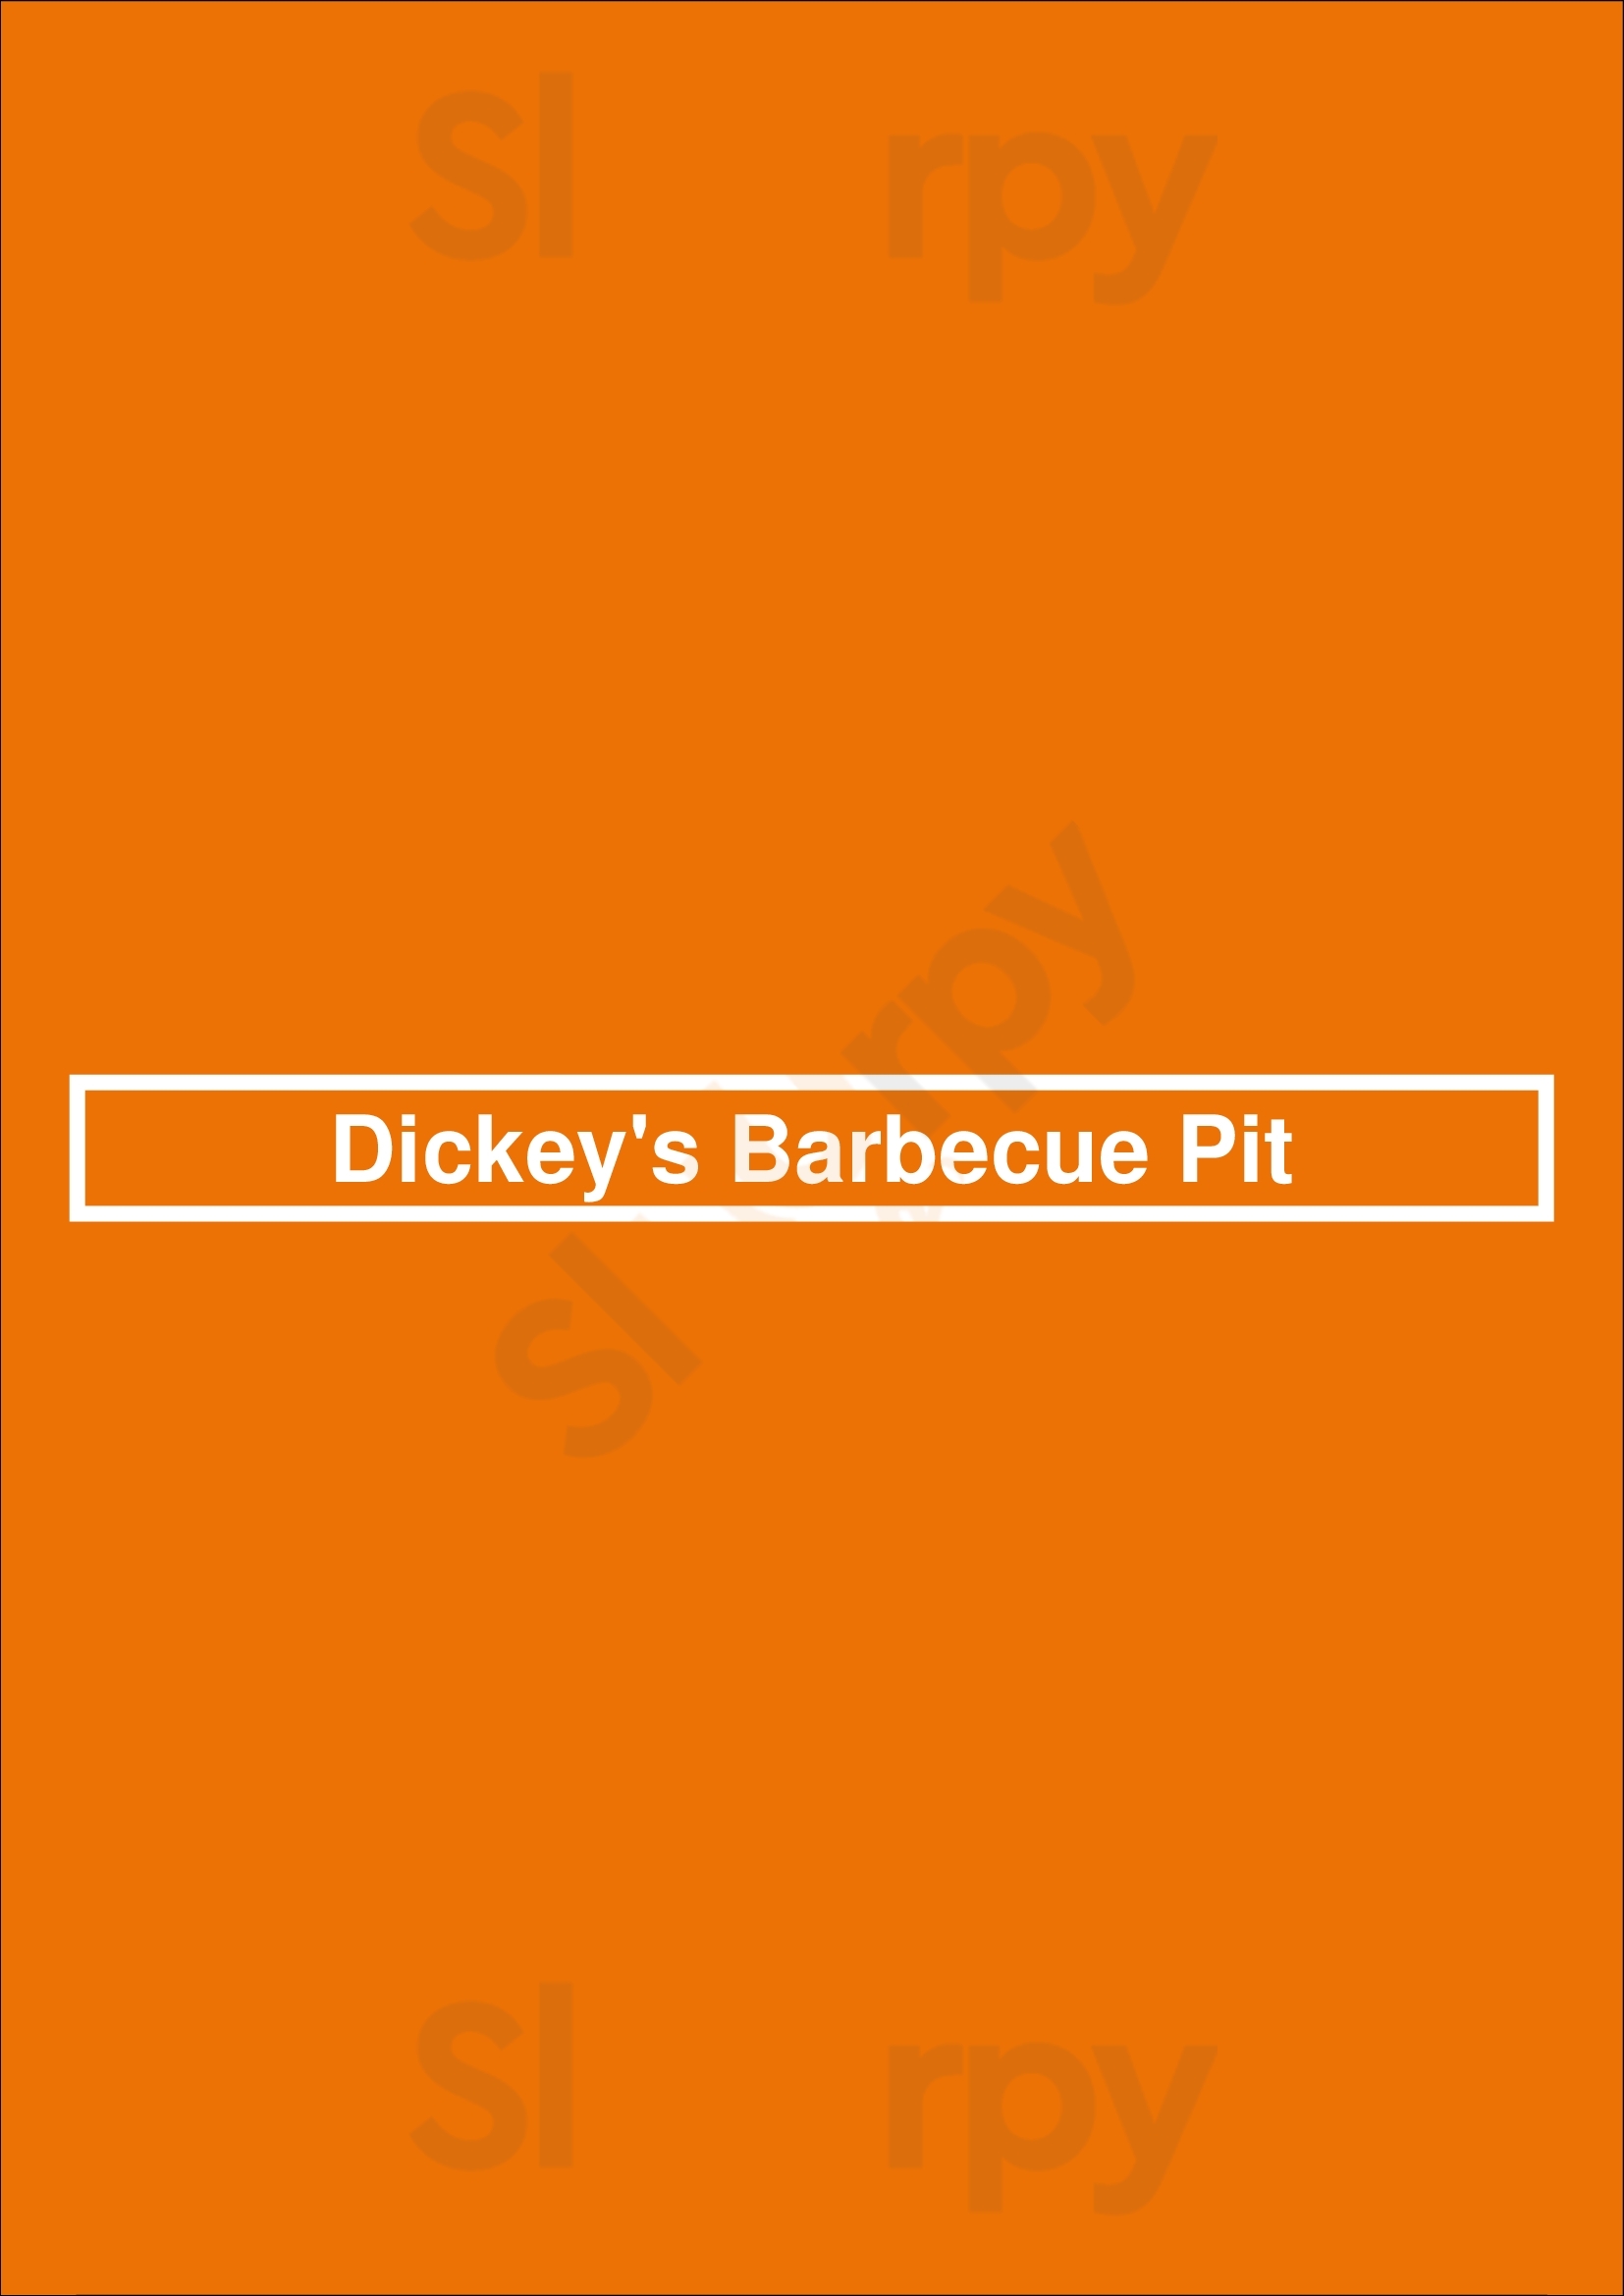 Dickey's Barbecue Pit Las Vegas Menu - 1